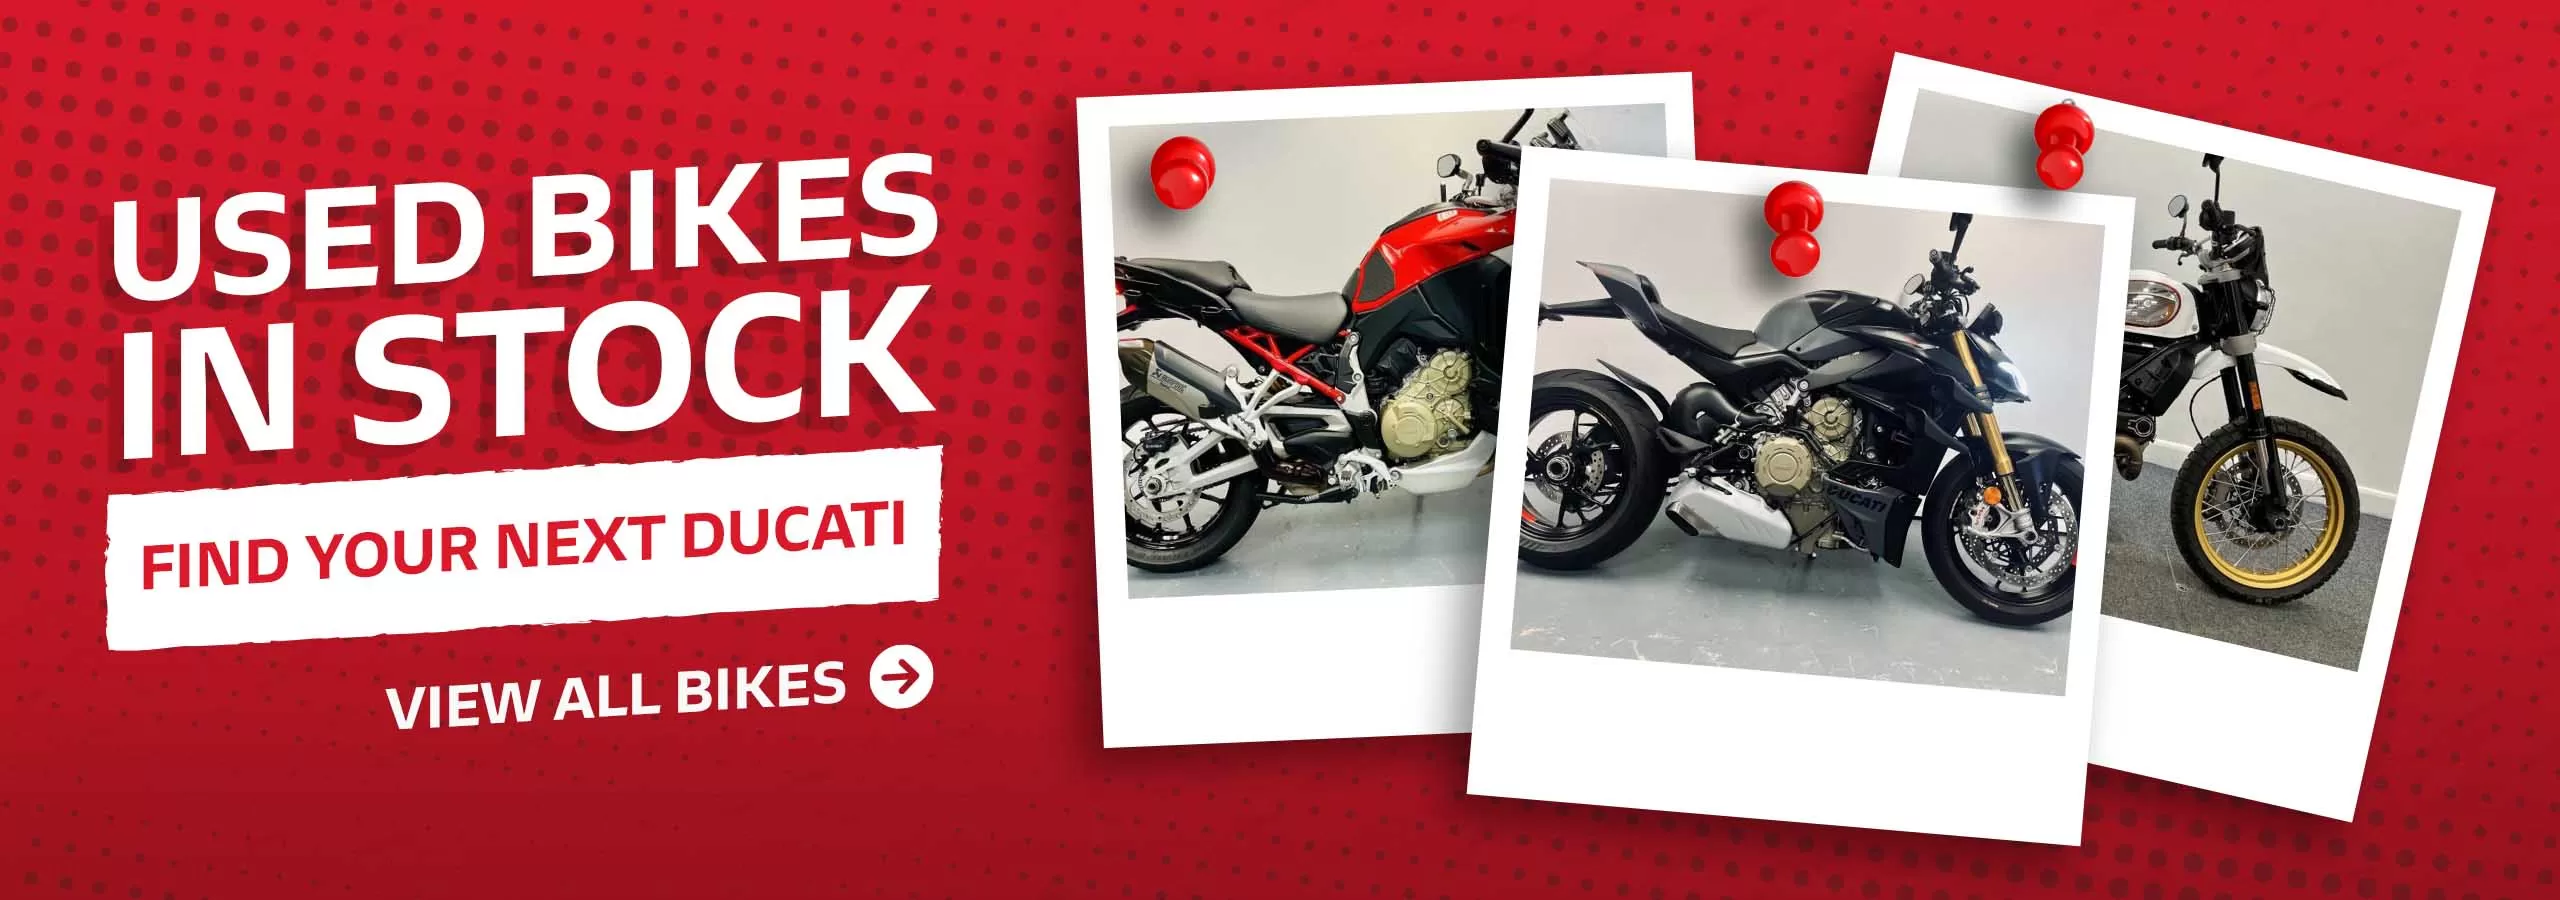 Ducati Used Bikes in stock at Laguna Motorcycles in Ashford